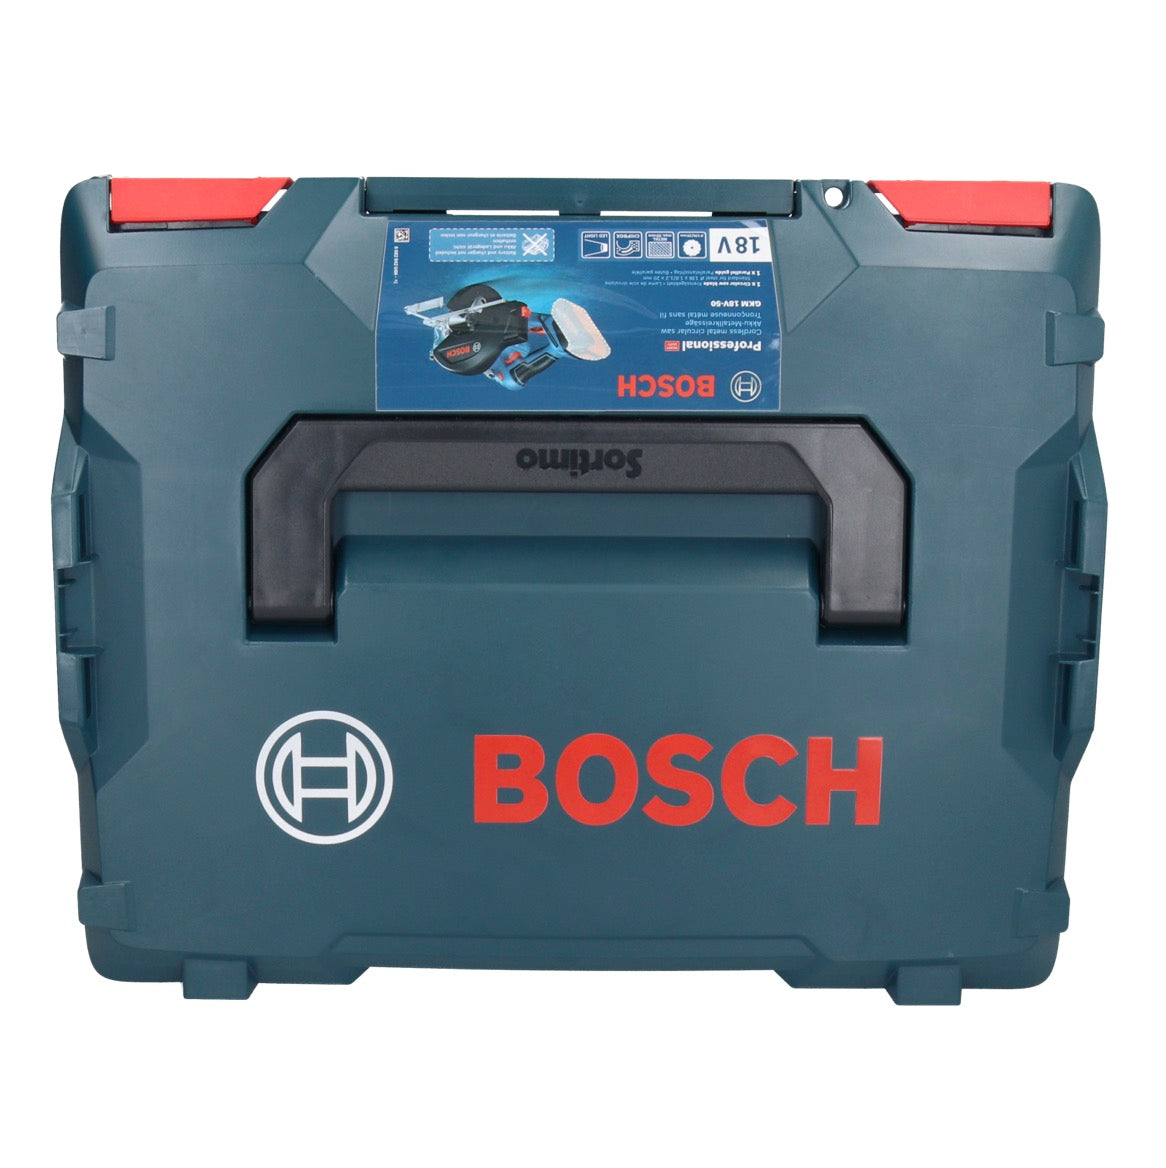 Bosch GKM 18V-50 Professional Akku Metall Handkreissäge 18 V 136 mm Brushless + 1x Akku 5,0 Ah + Ladegerät + L-Boxx - Toolbrothers